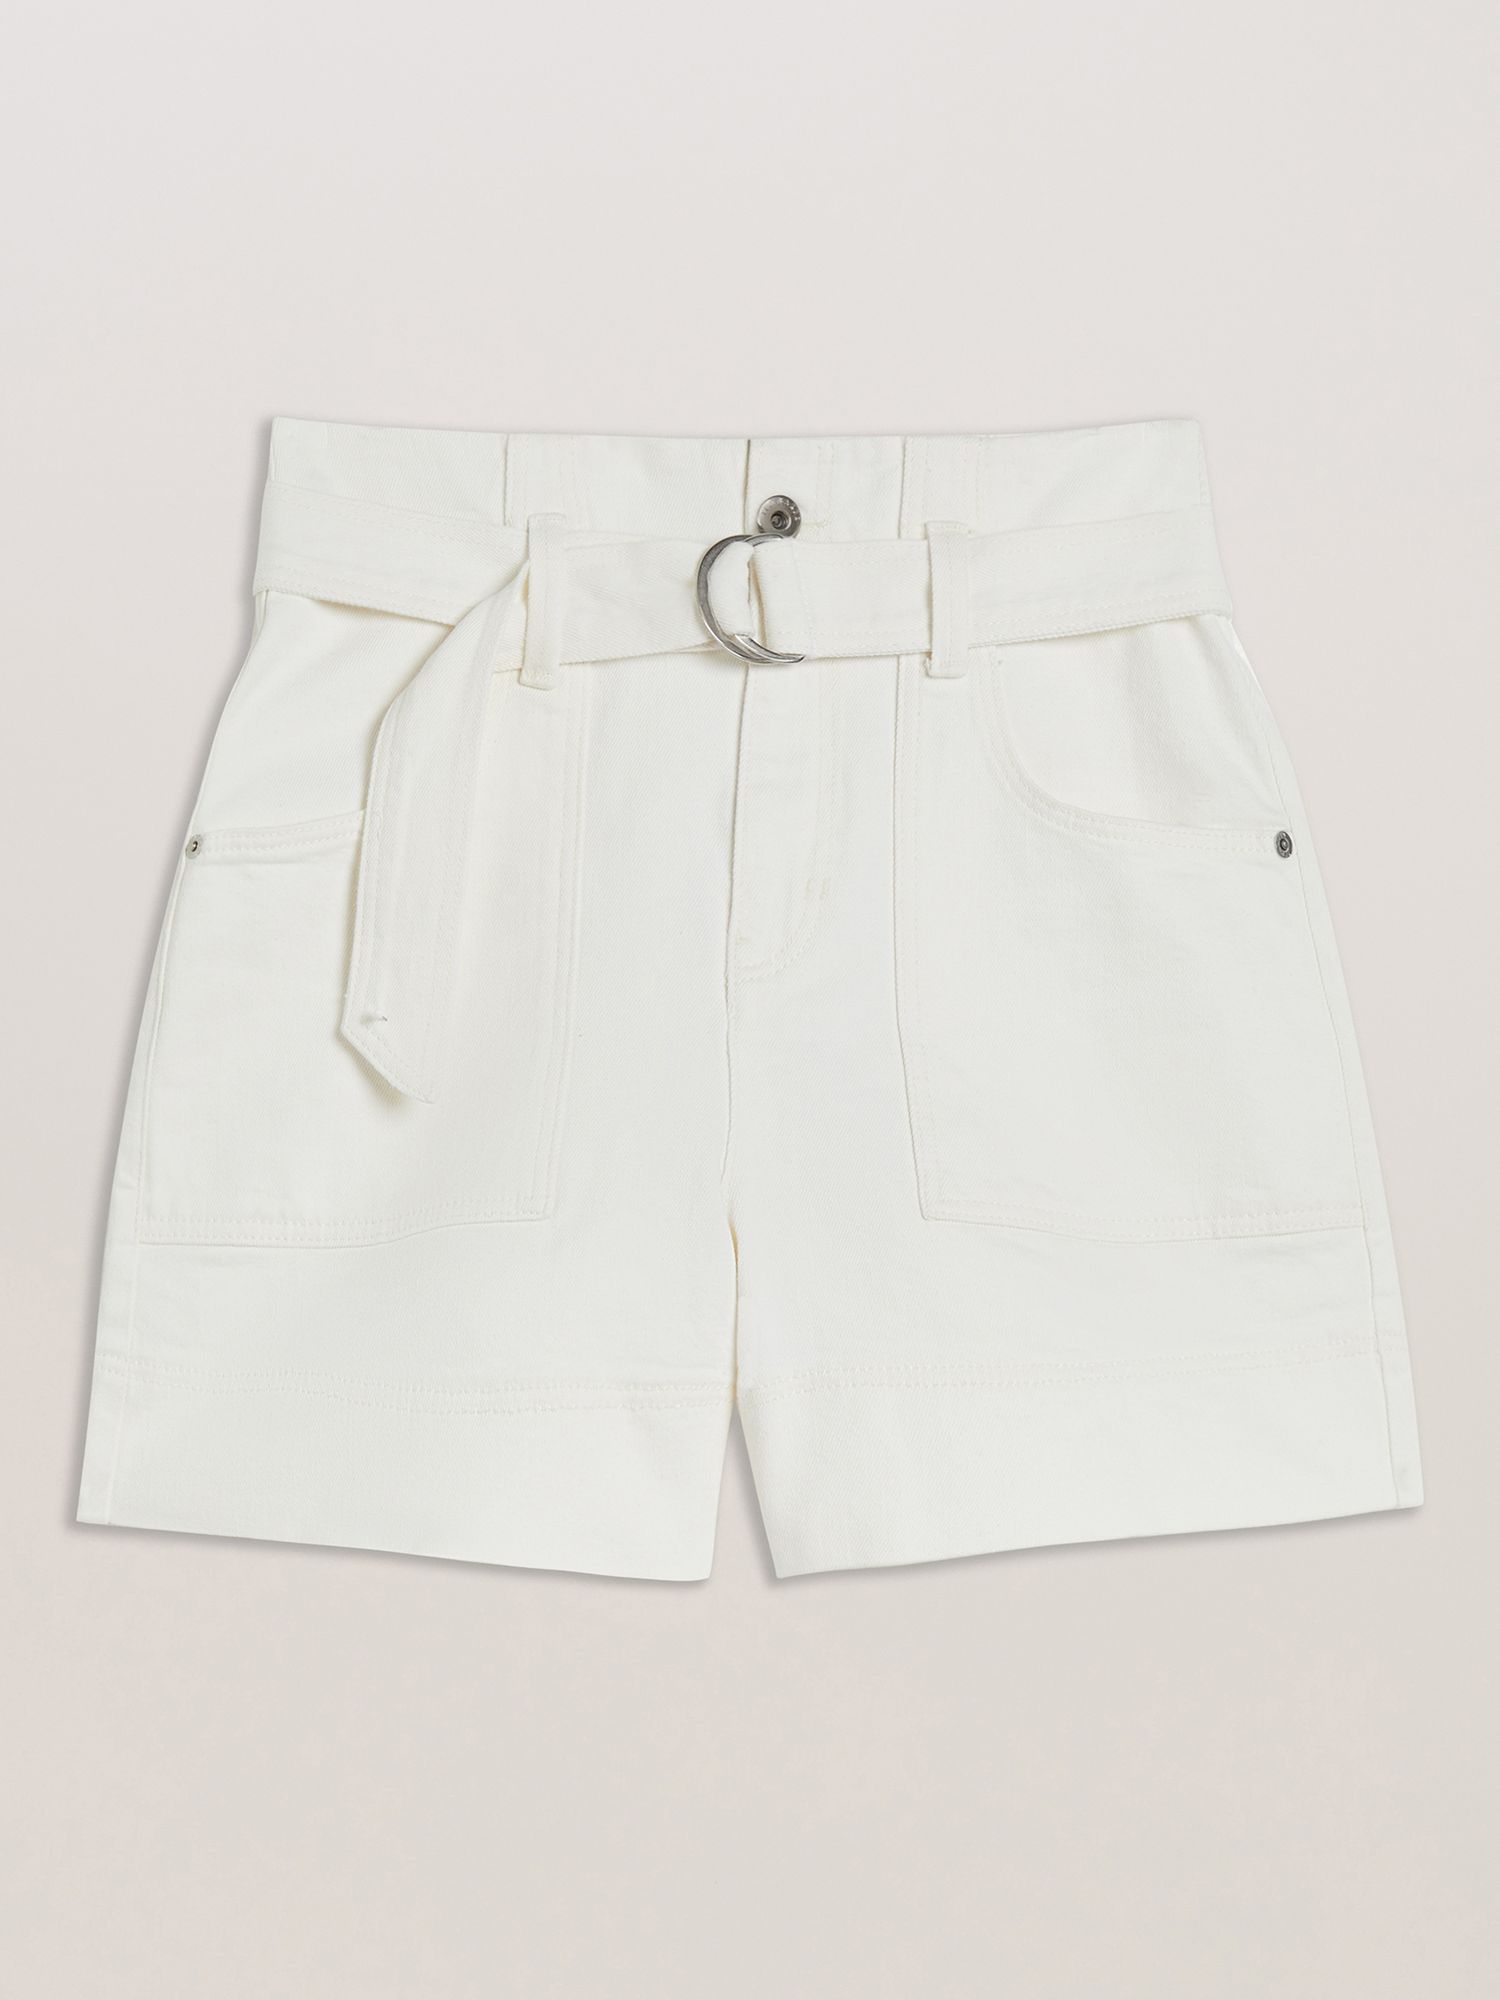 Ted Baker Selda Self-Tie Belt High Waist Shorts, White, 12